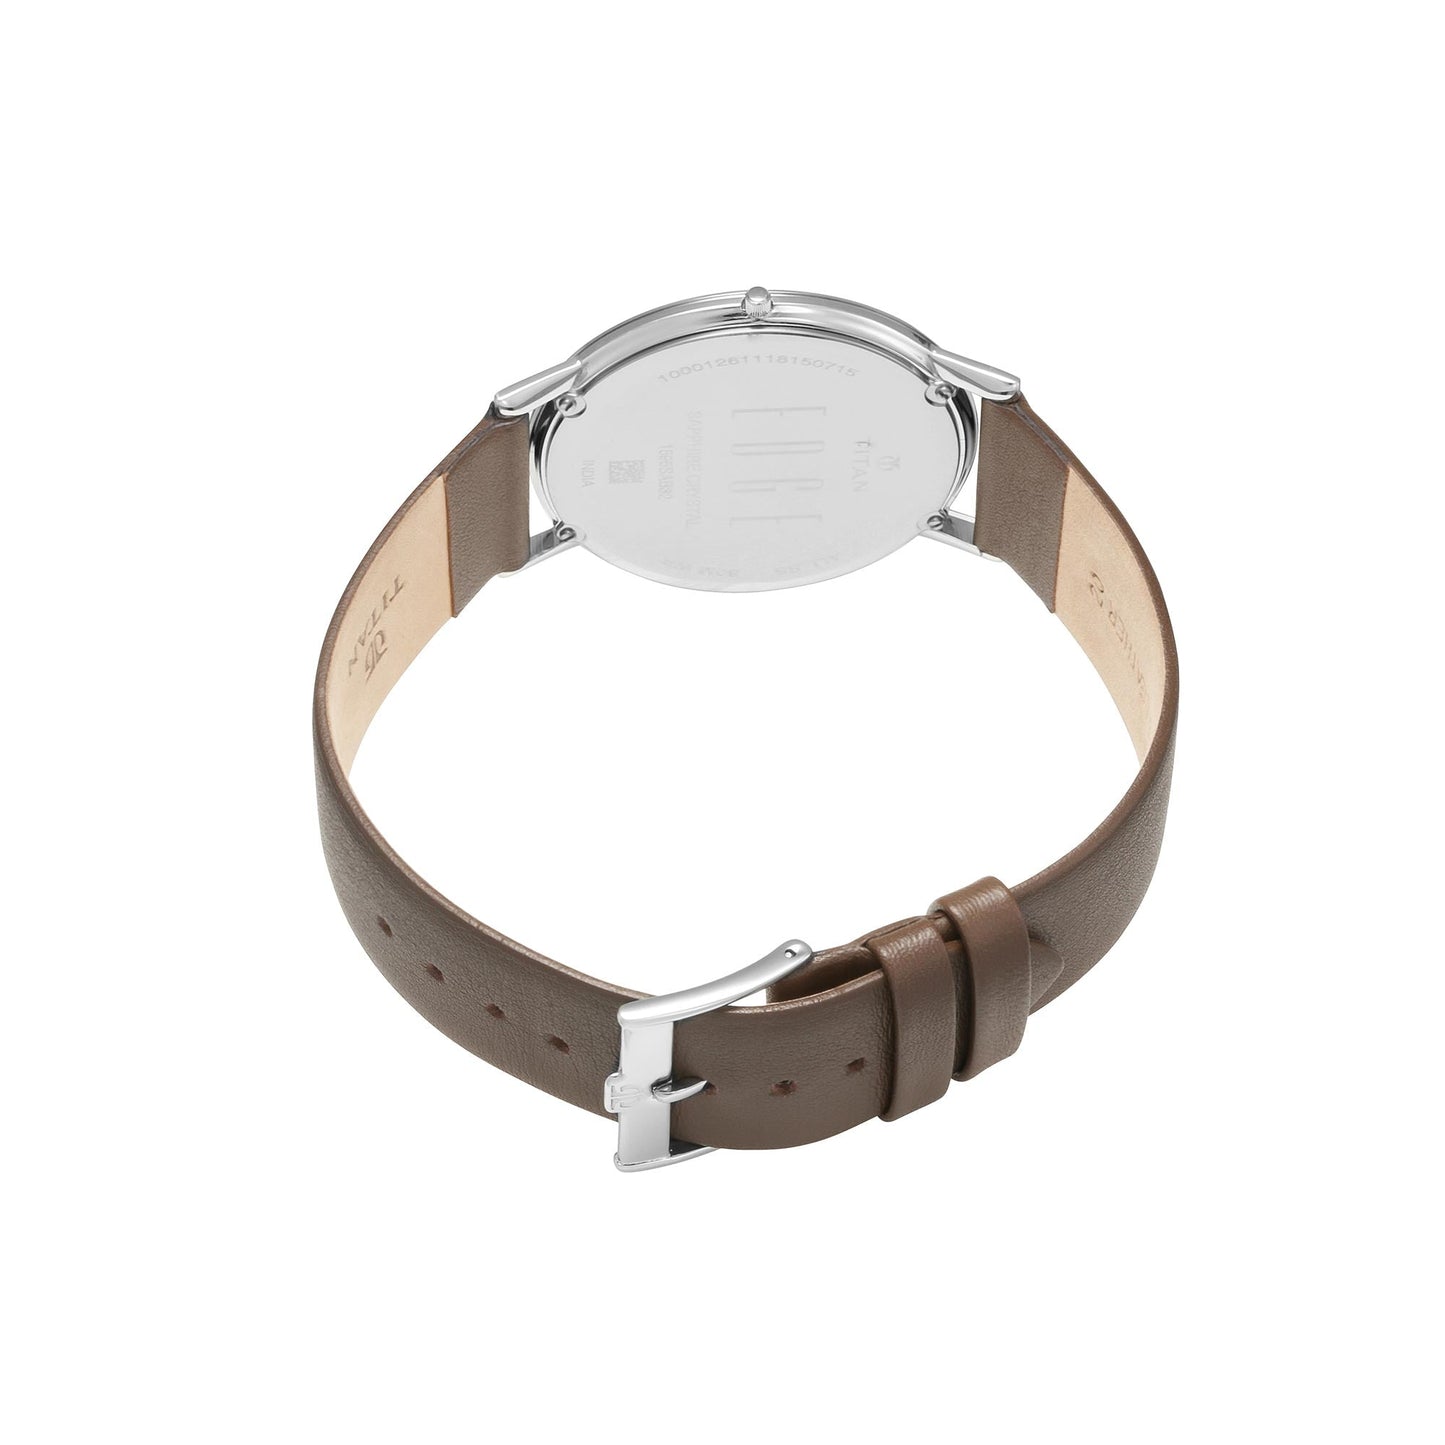 Titan Edge SilverDial Analog Stainless Steel Leather Strap Watch for Men